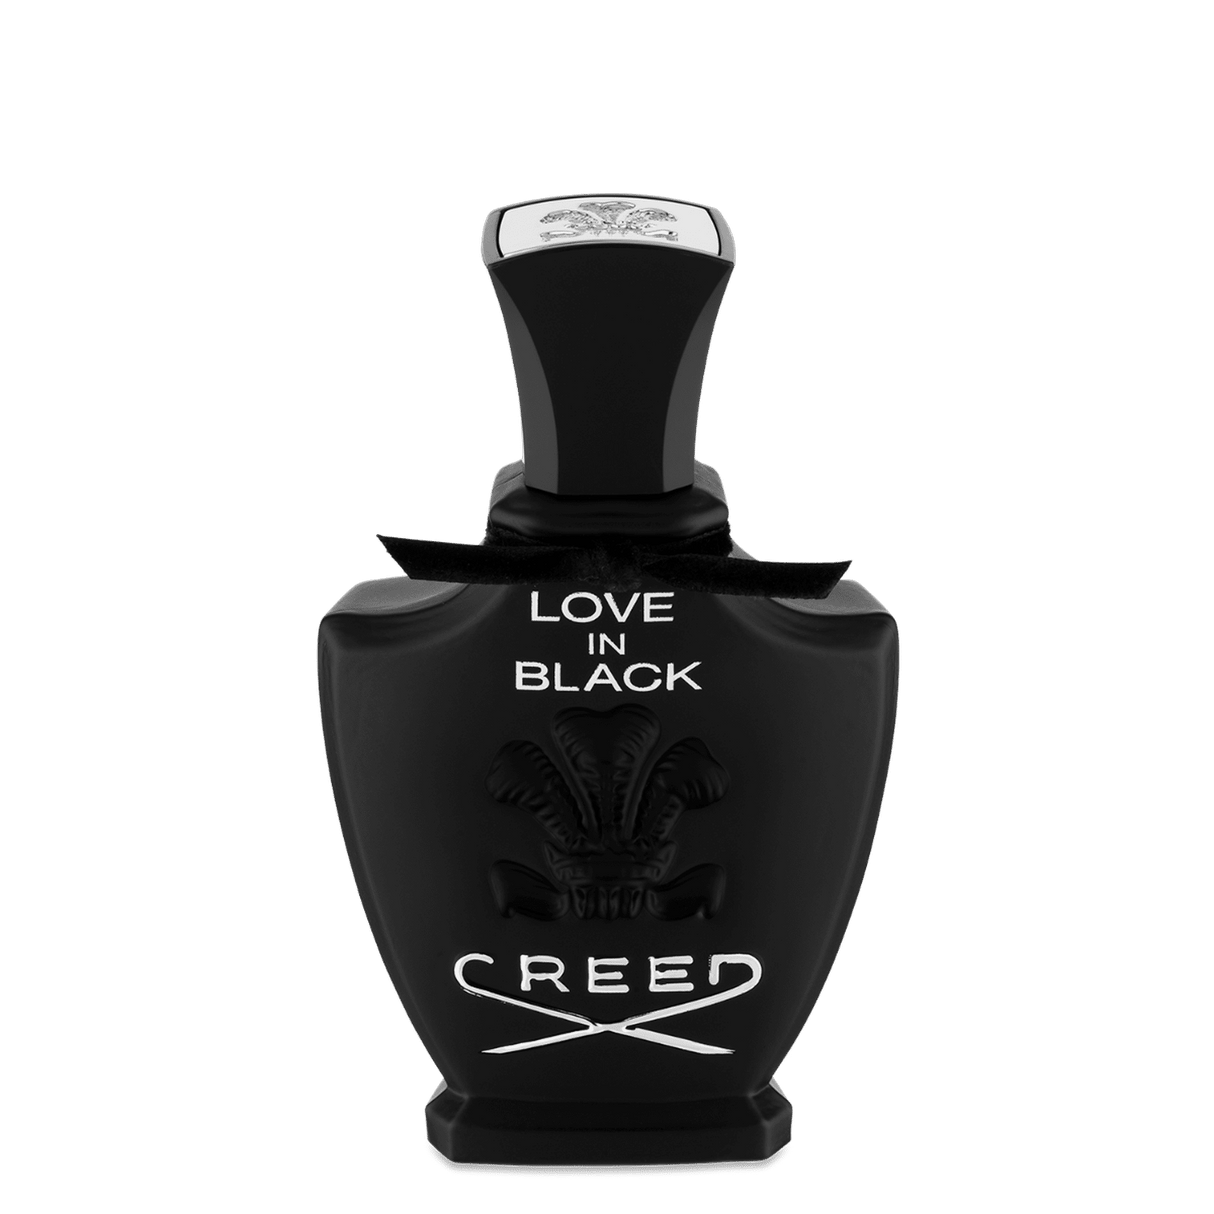 Creed Love in Black Eau De Parfum